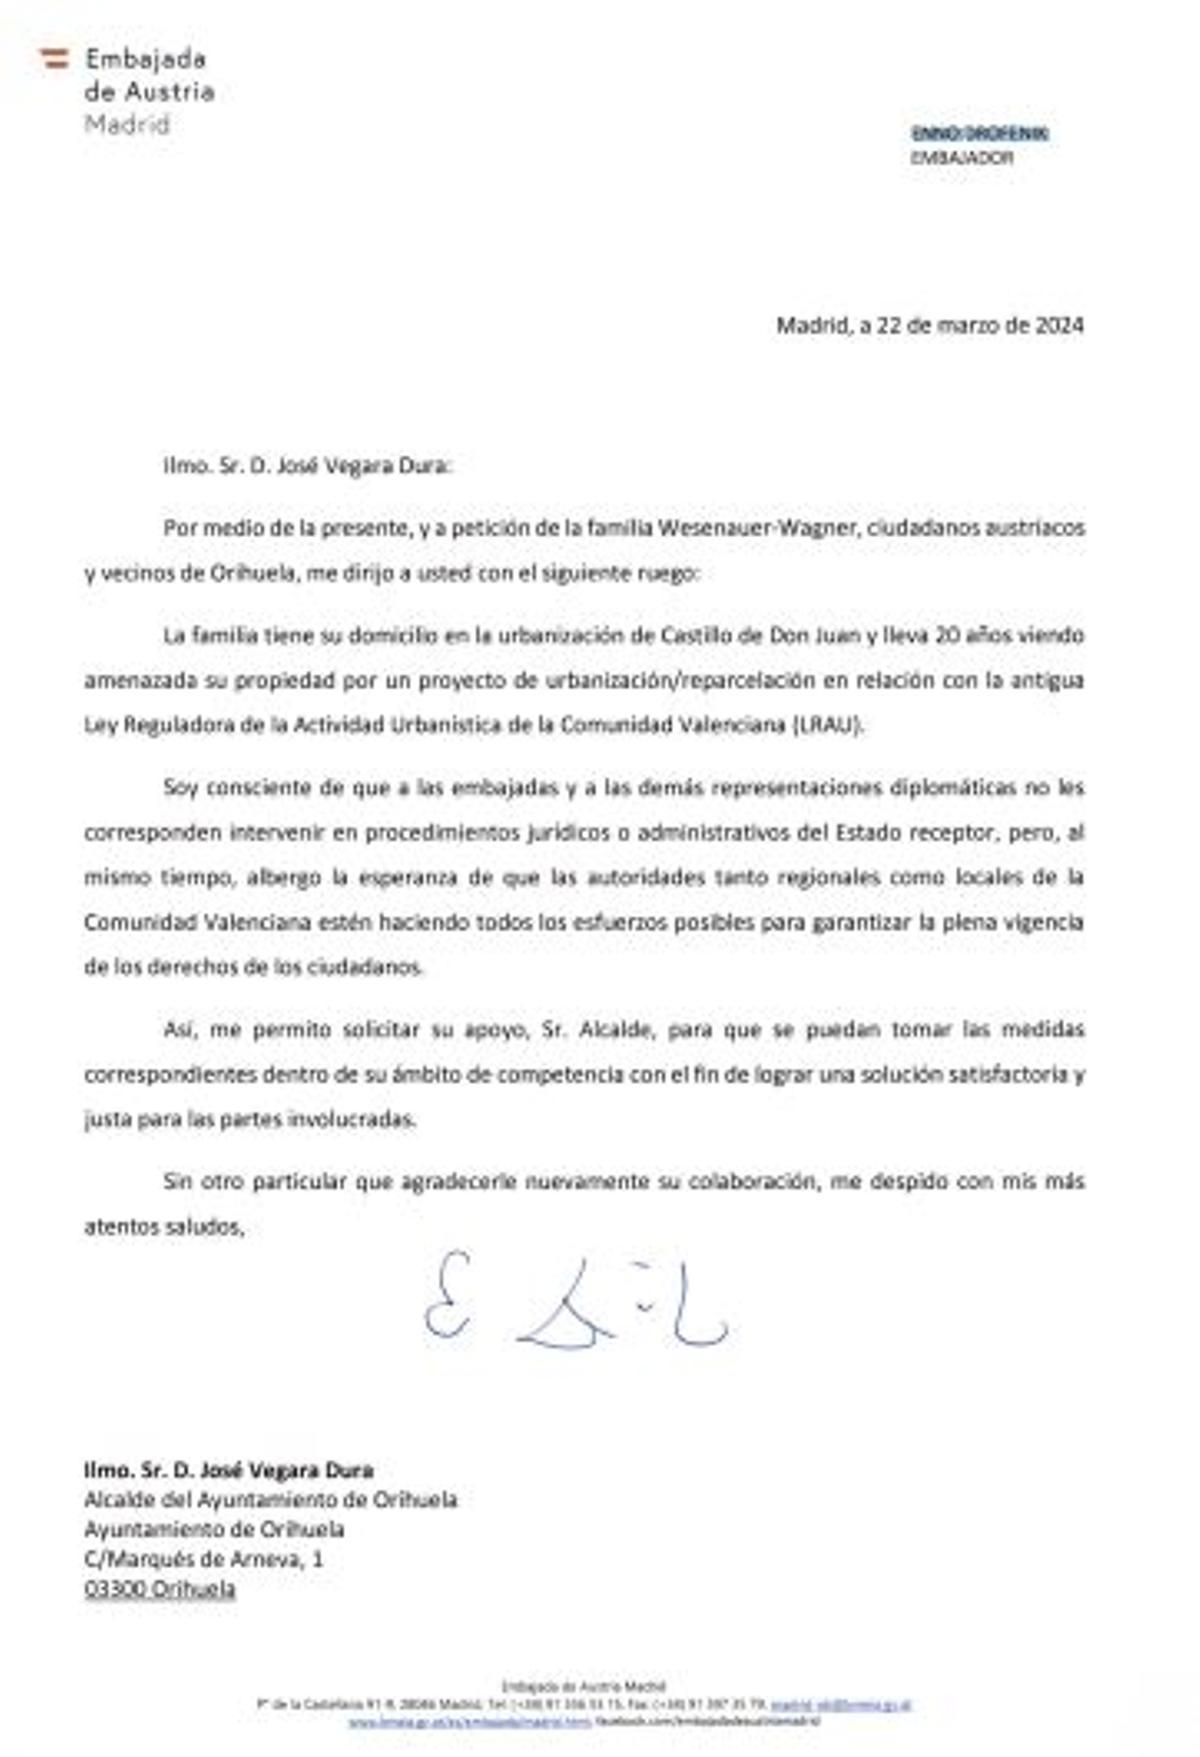 Carta del embajador de Austria en España al alcalde Vegara